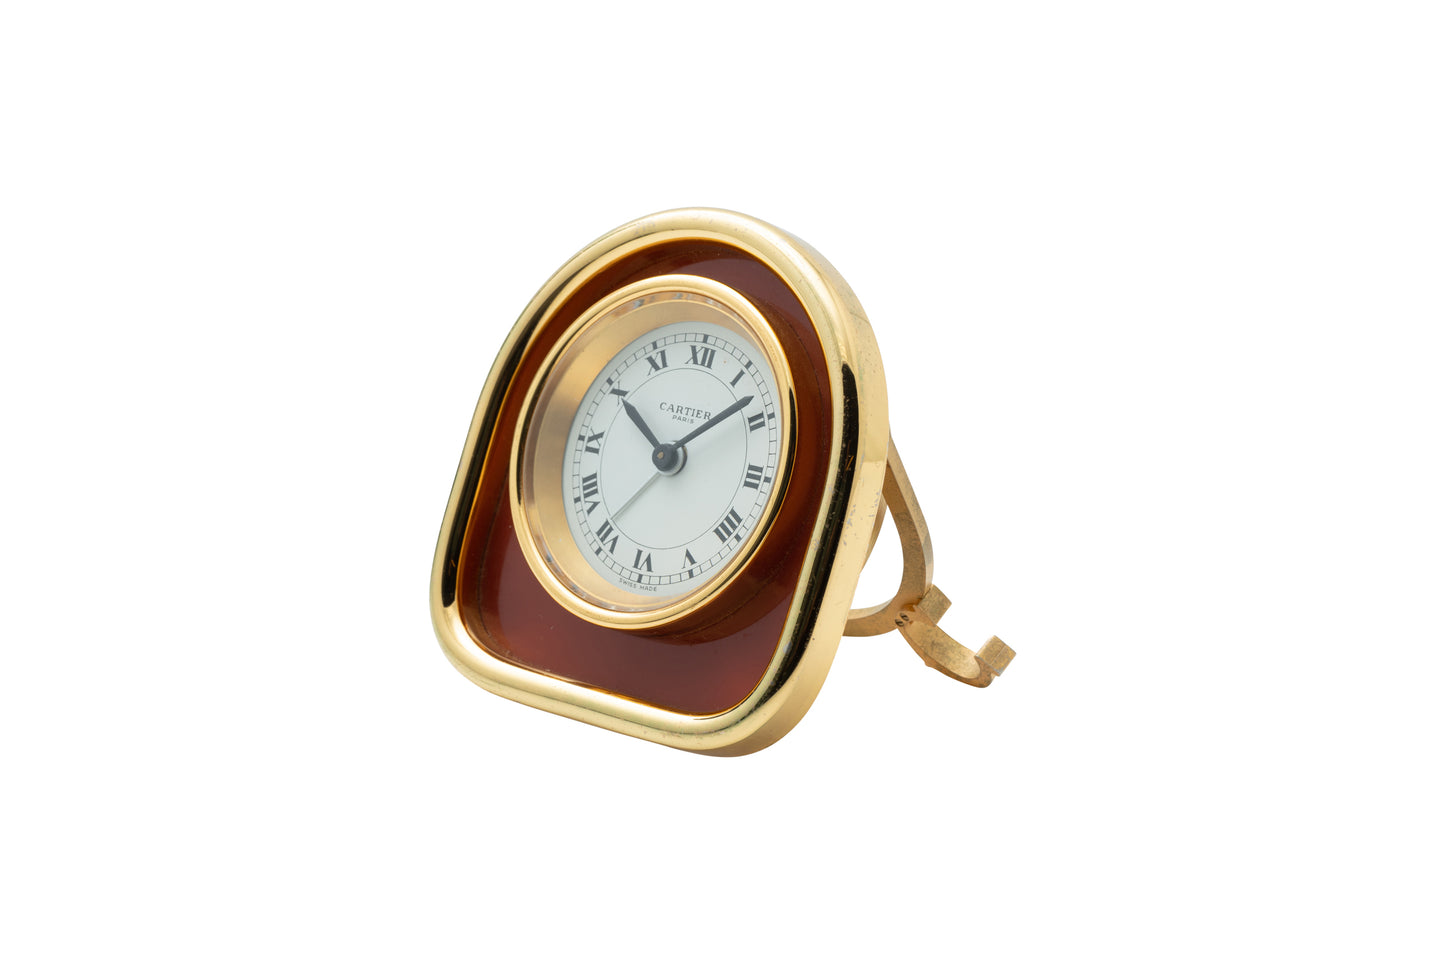 Cartier Must De Cartier Travel Alarm Clock